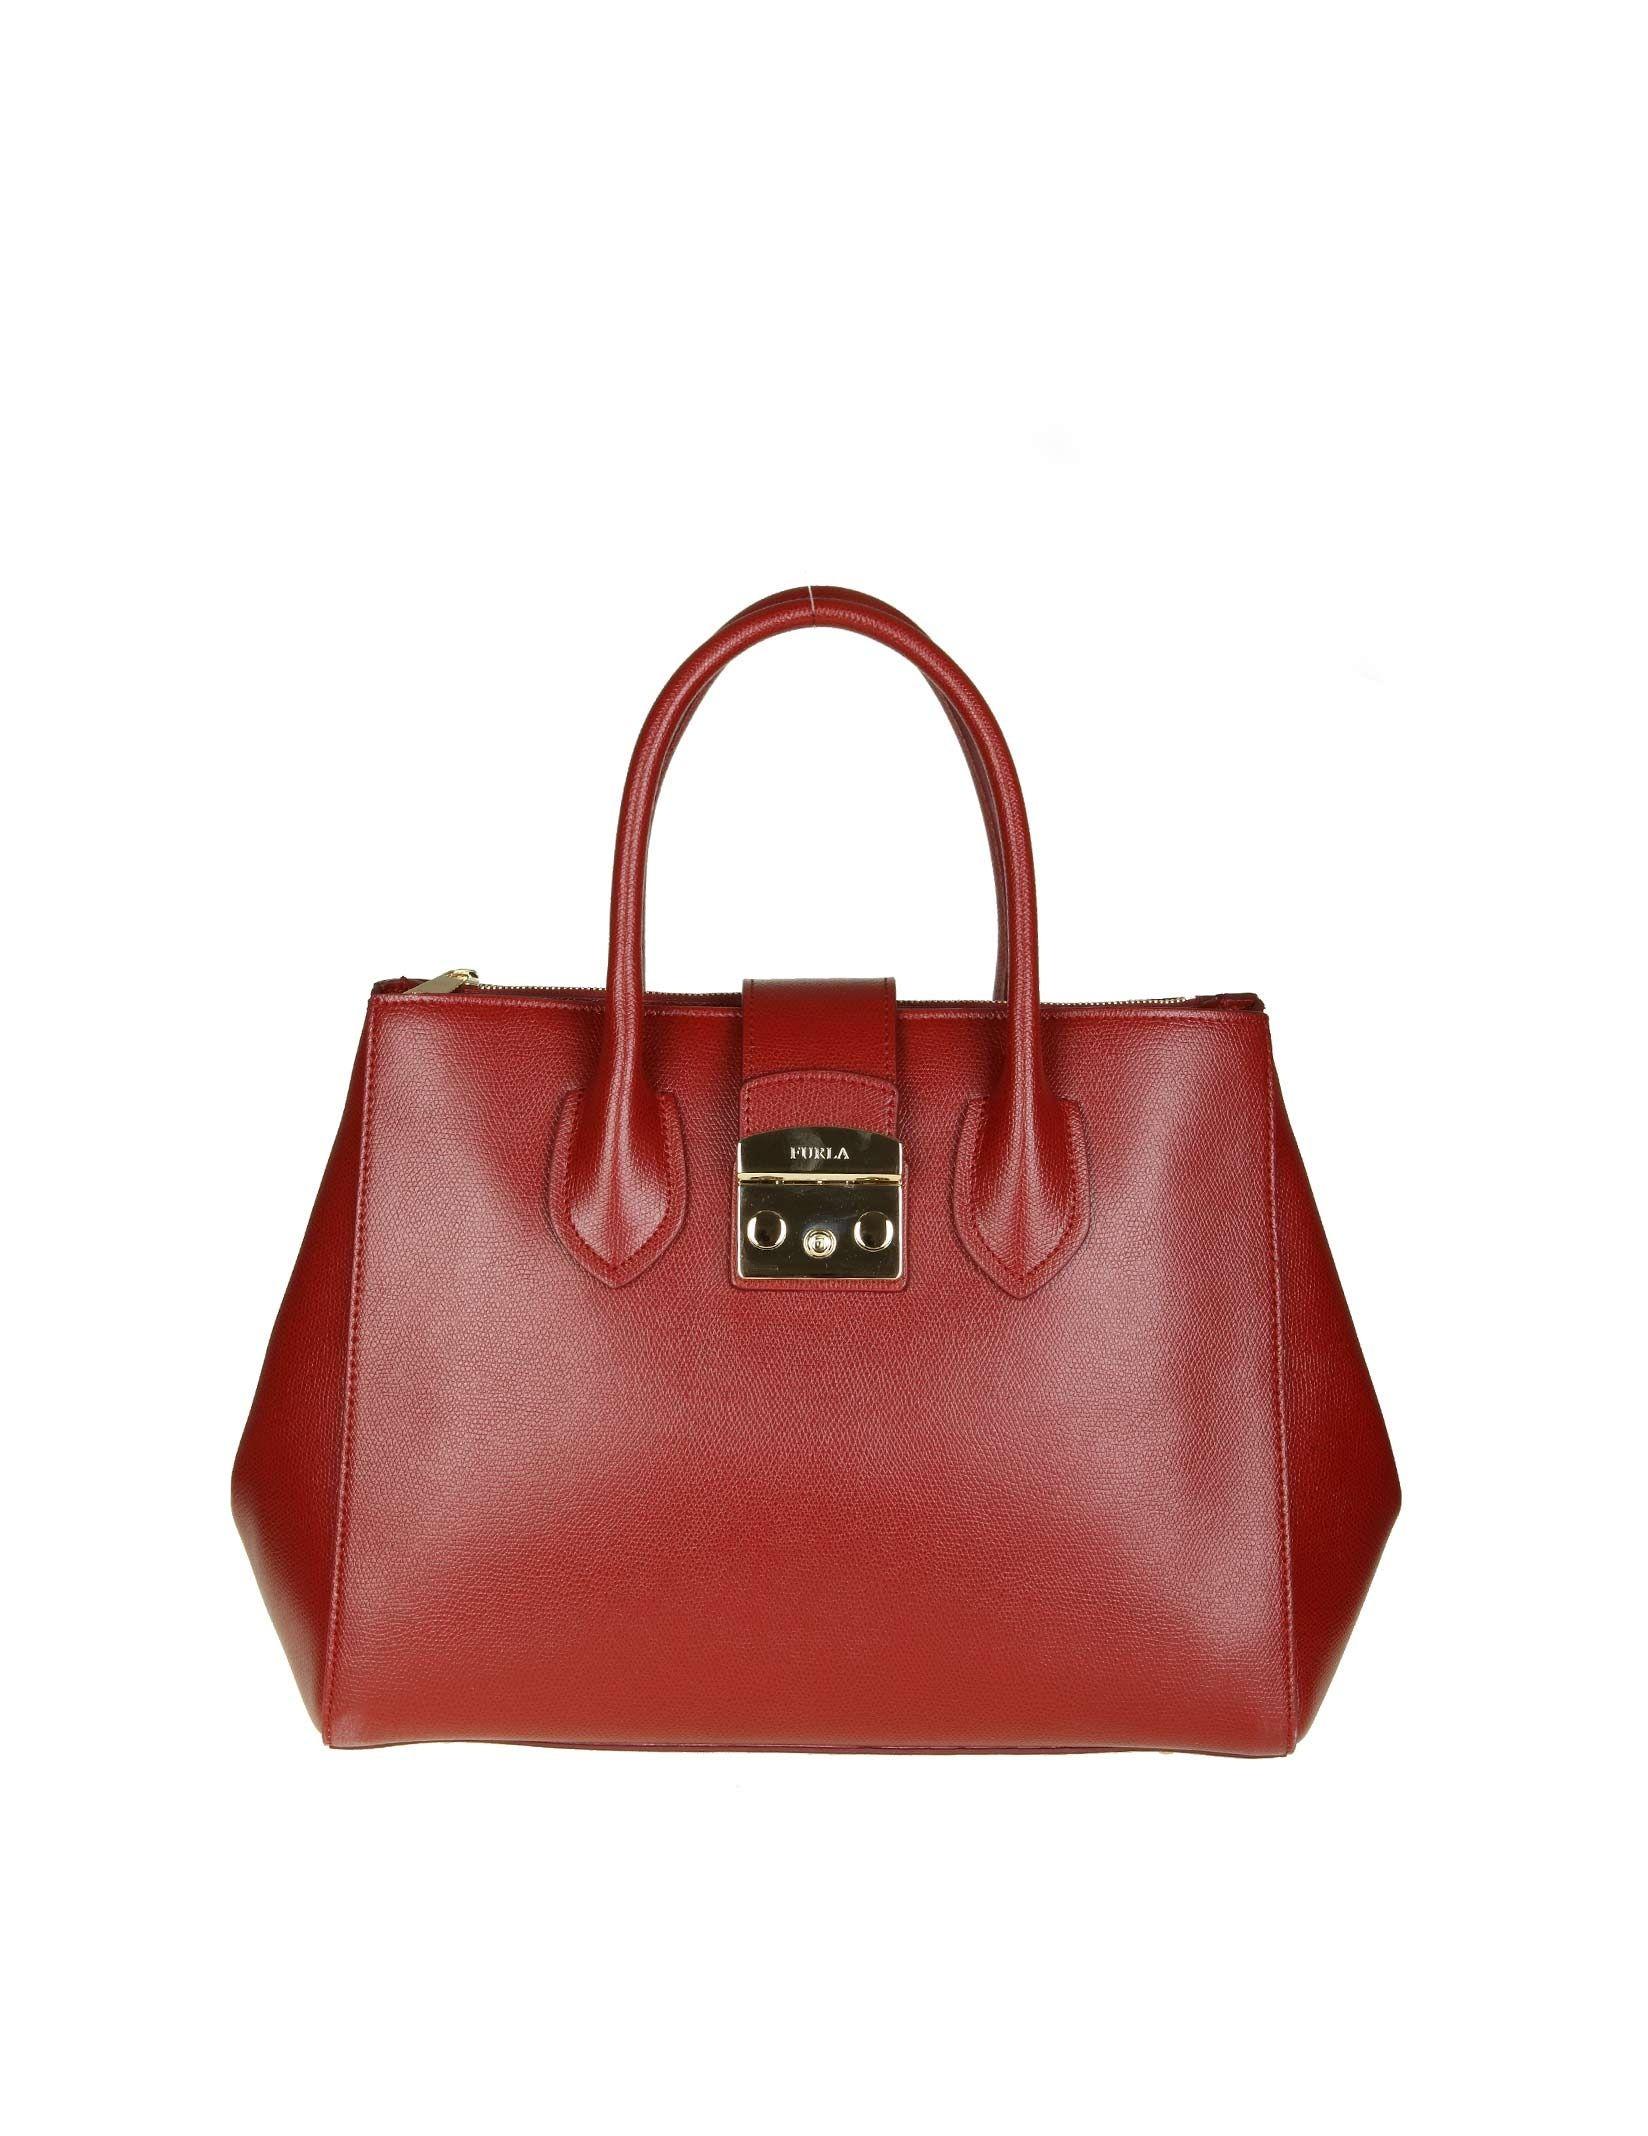 Furla Red Leather Handbag - Lyst